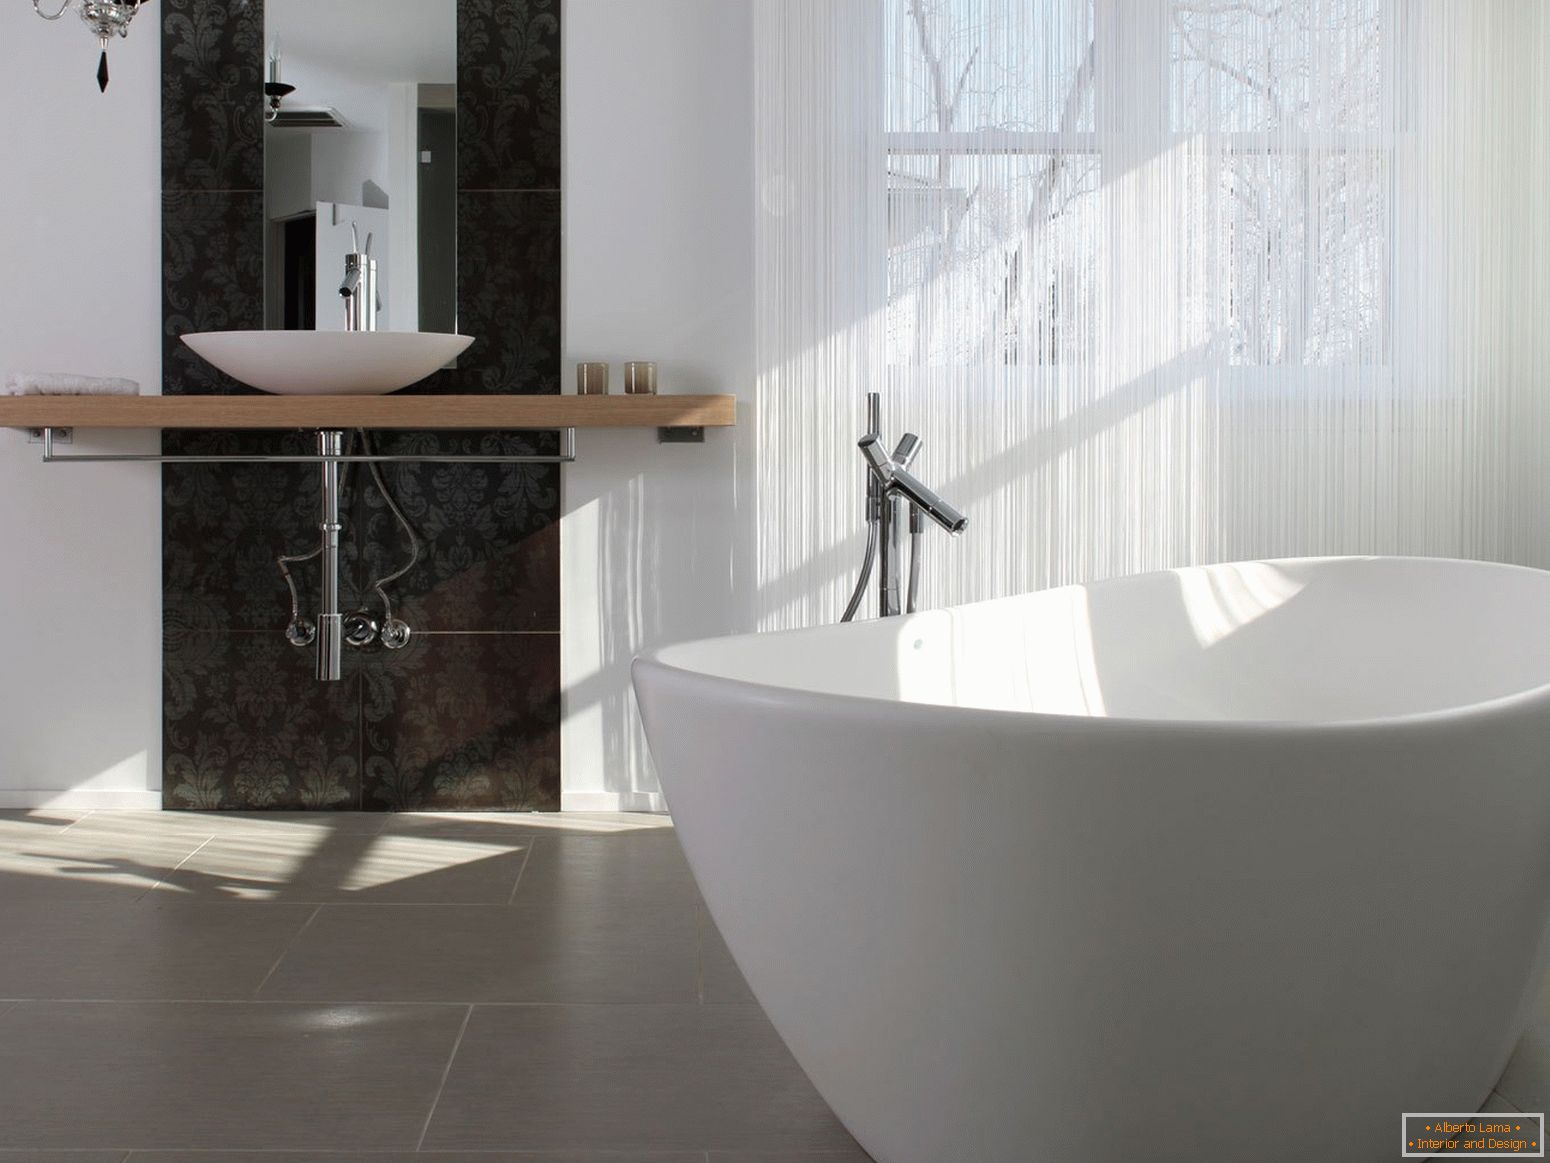 Luxo e simplicidade no design do banheiro